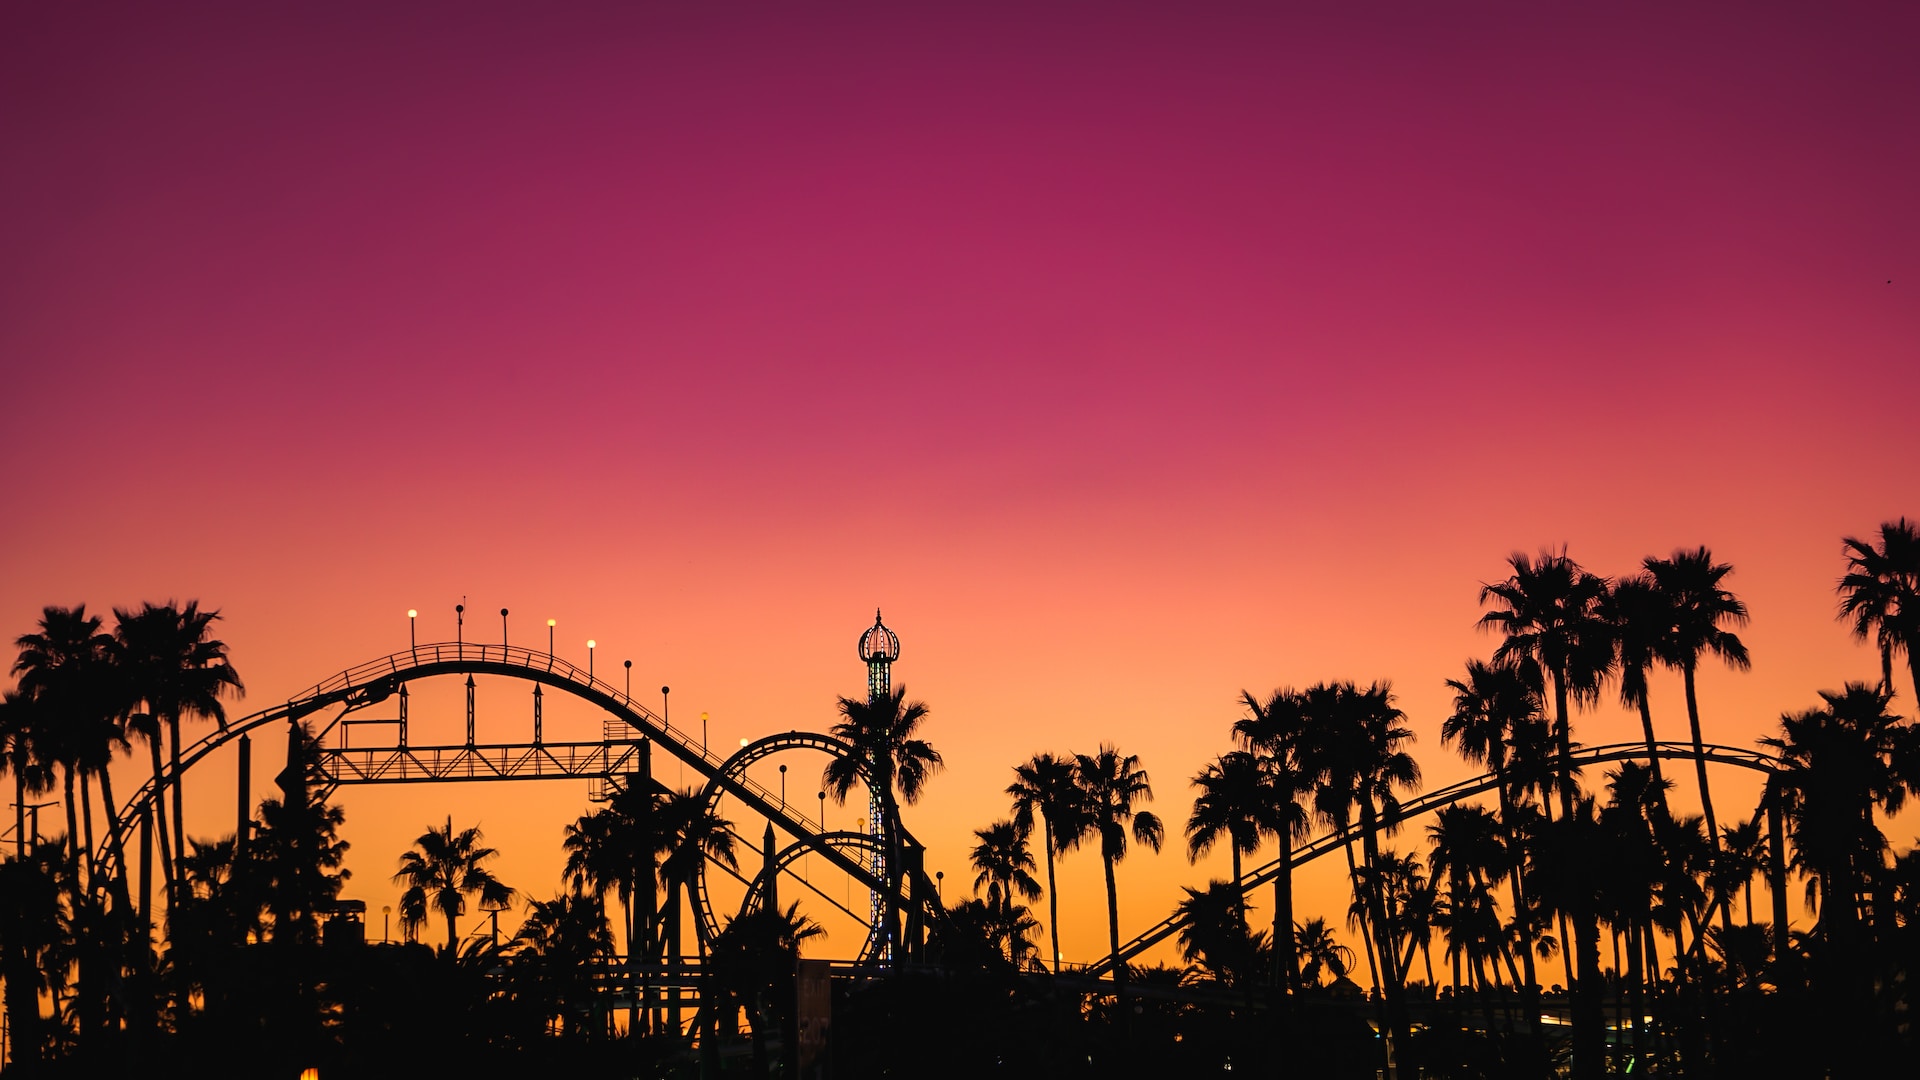 Sun setting on a theme park in Phoenix, Arizona.